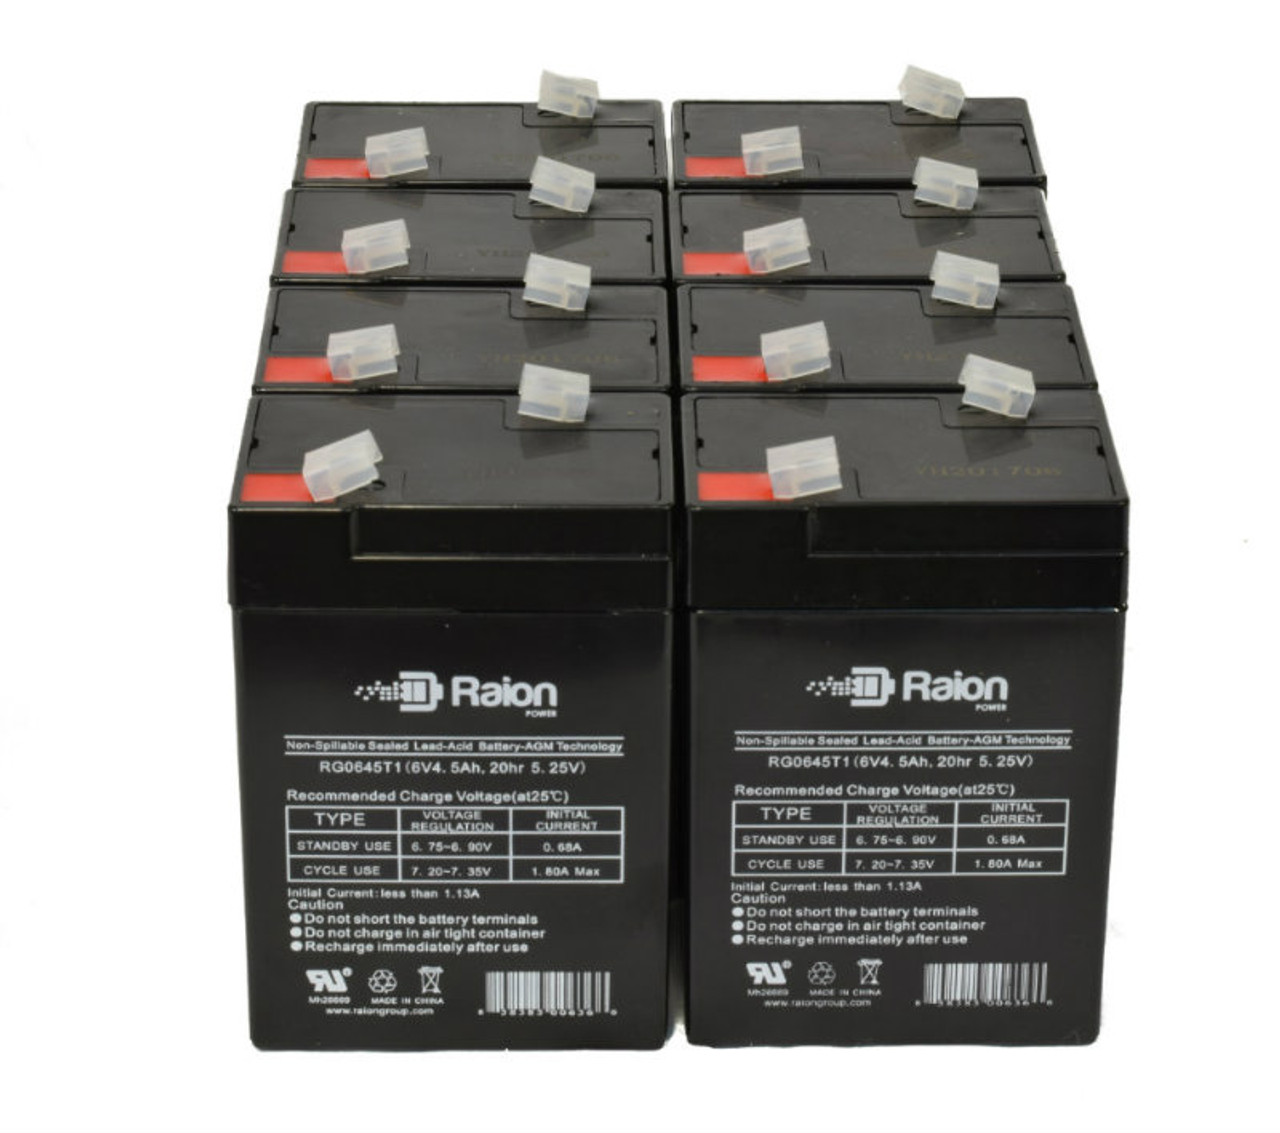 Raion Power 6 Volt 4.5Ah RG0645T1 Replacement Battery for Sonnenschein A5064 - 8 Pack